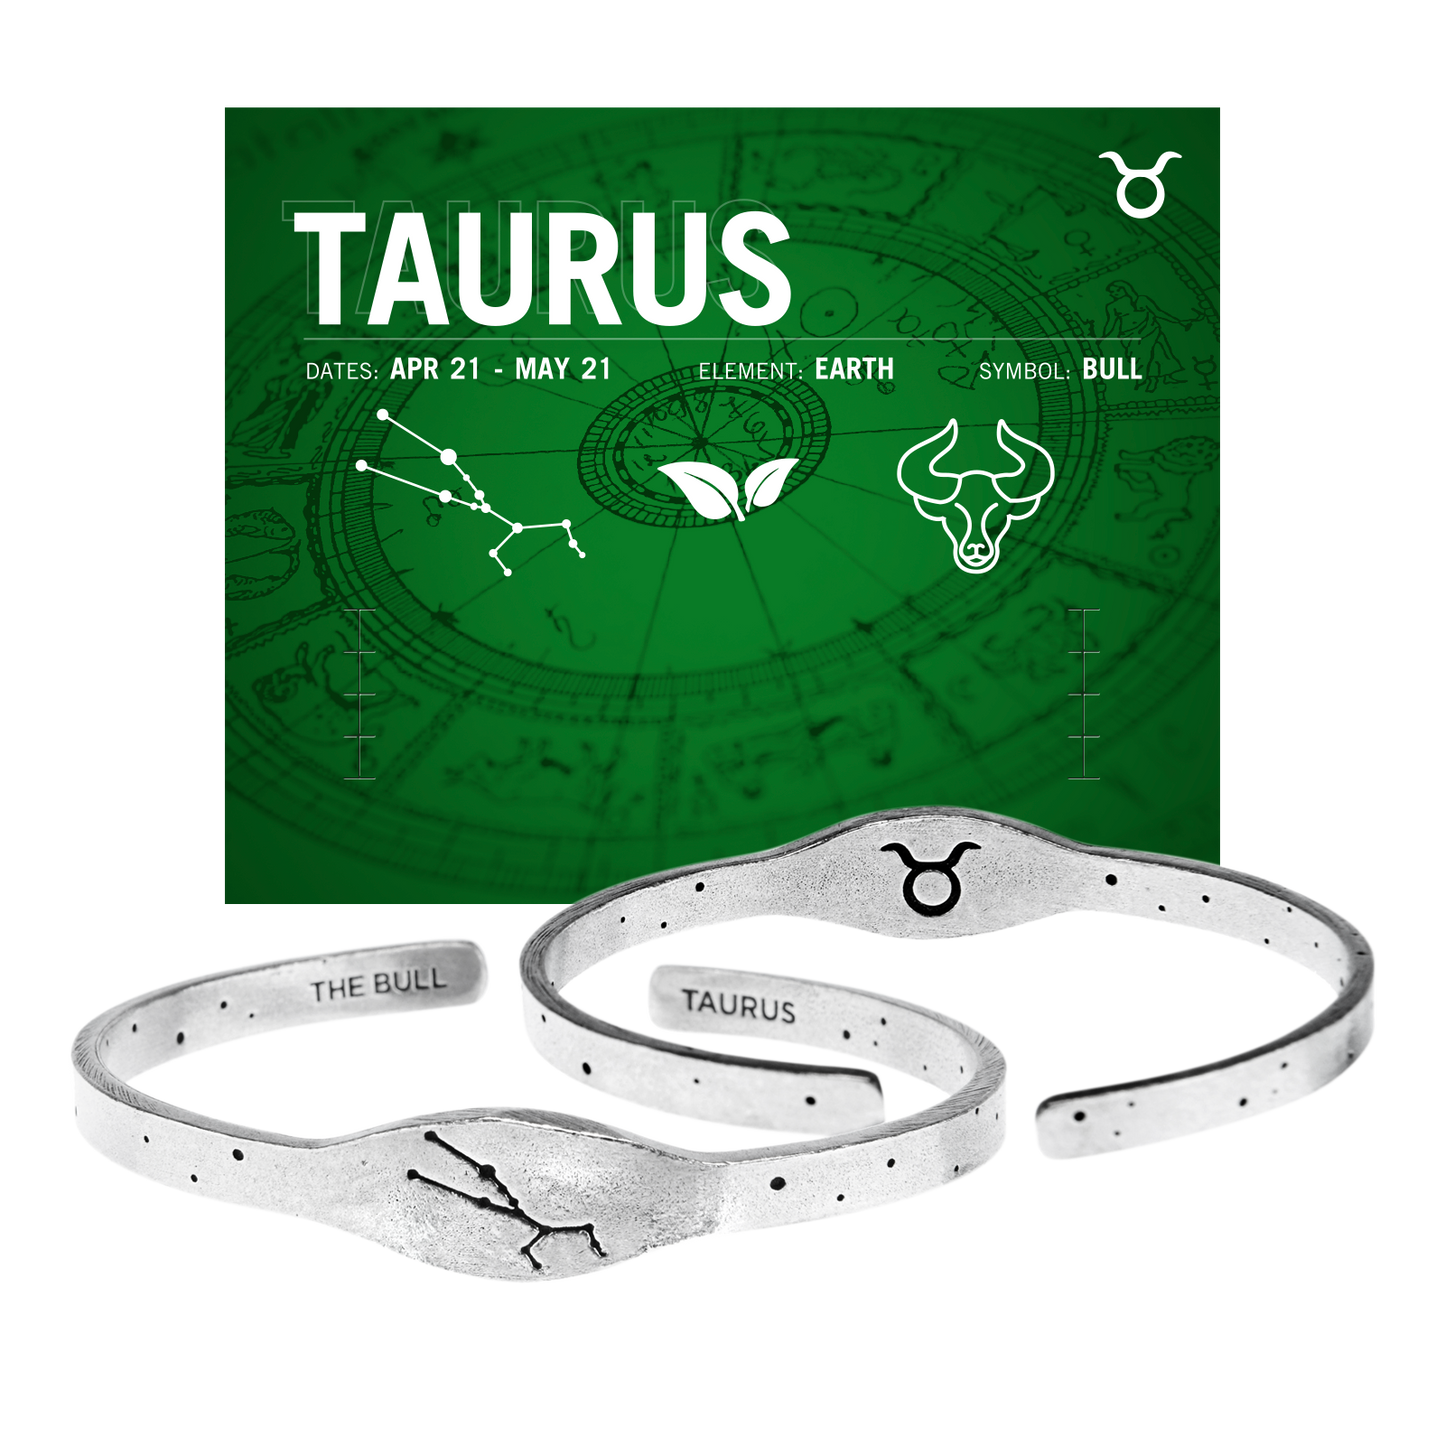 Zodiac Cuff Bracelet - Taurus